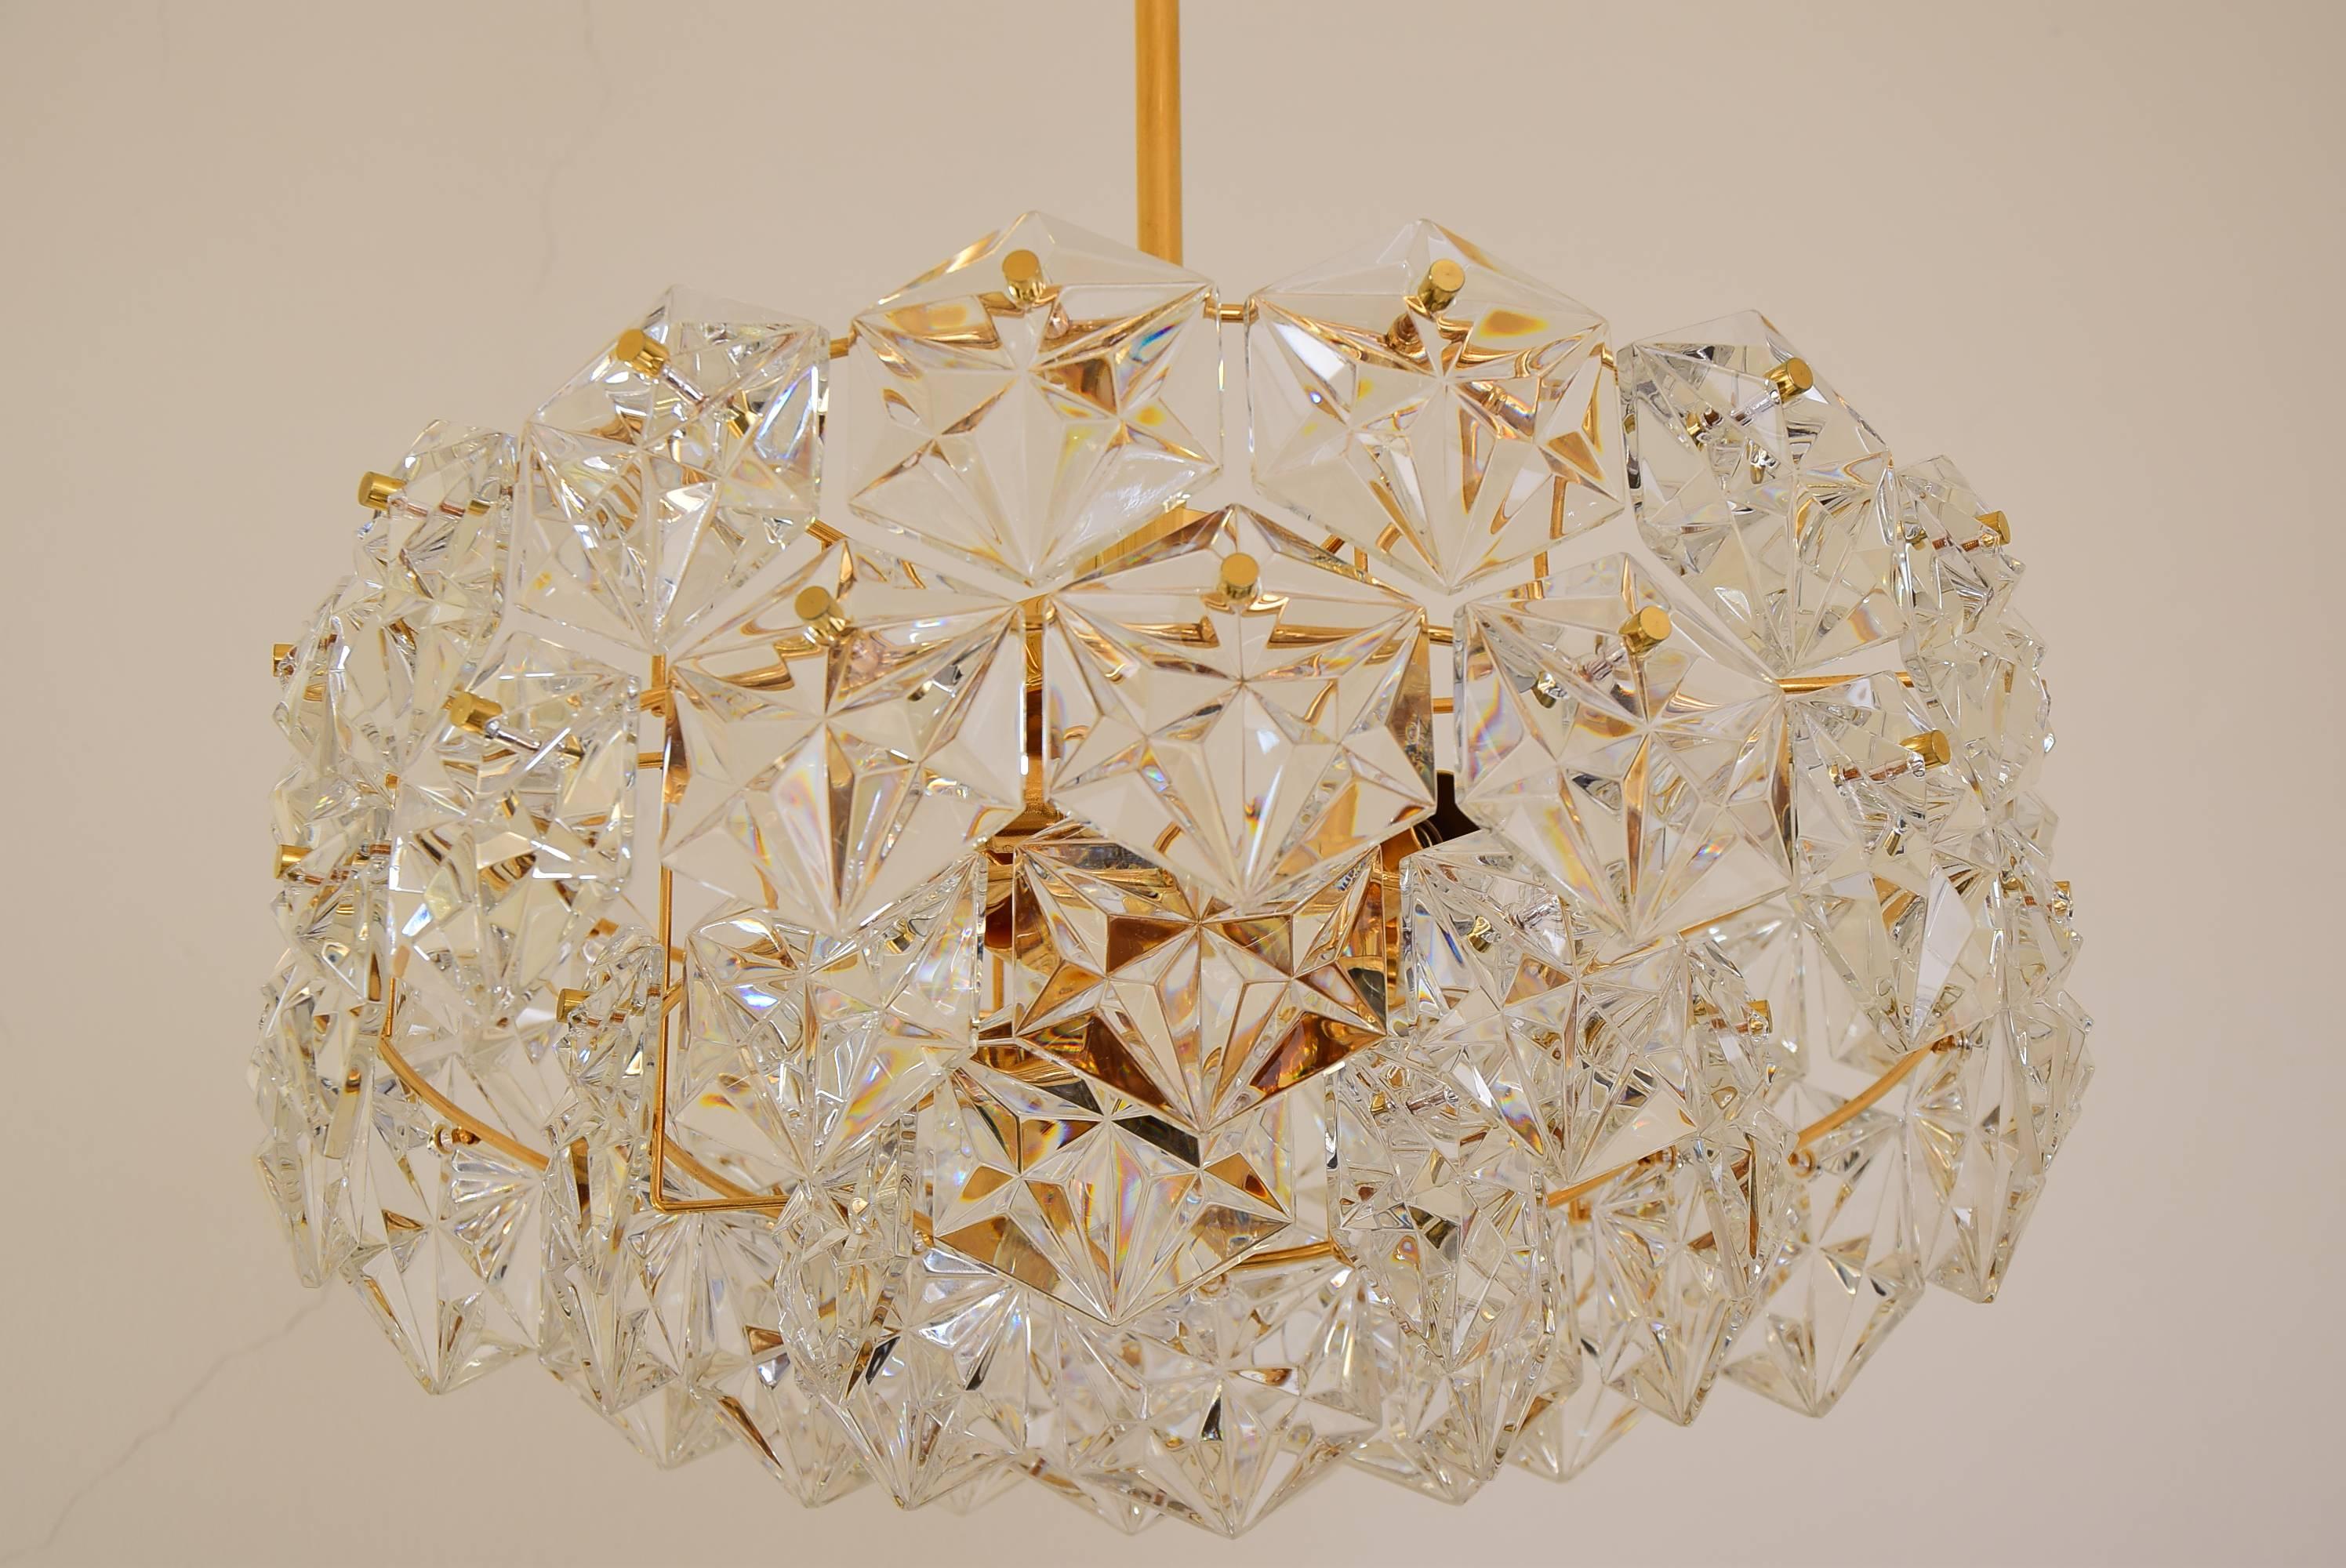 Gilded Kinkeldey chandelier with crystal glass.
Original condition.
 